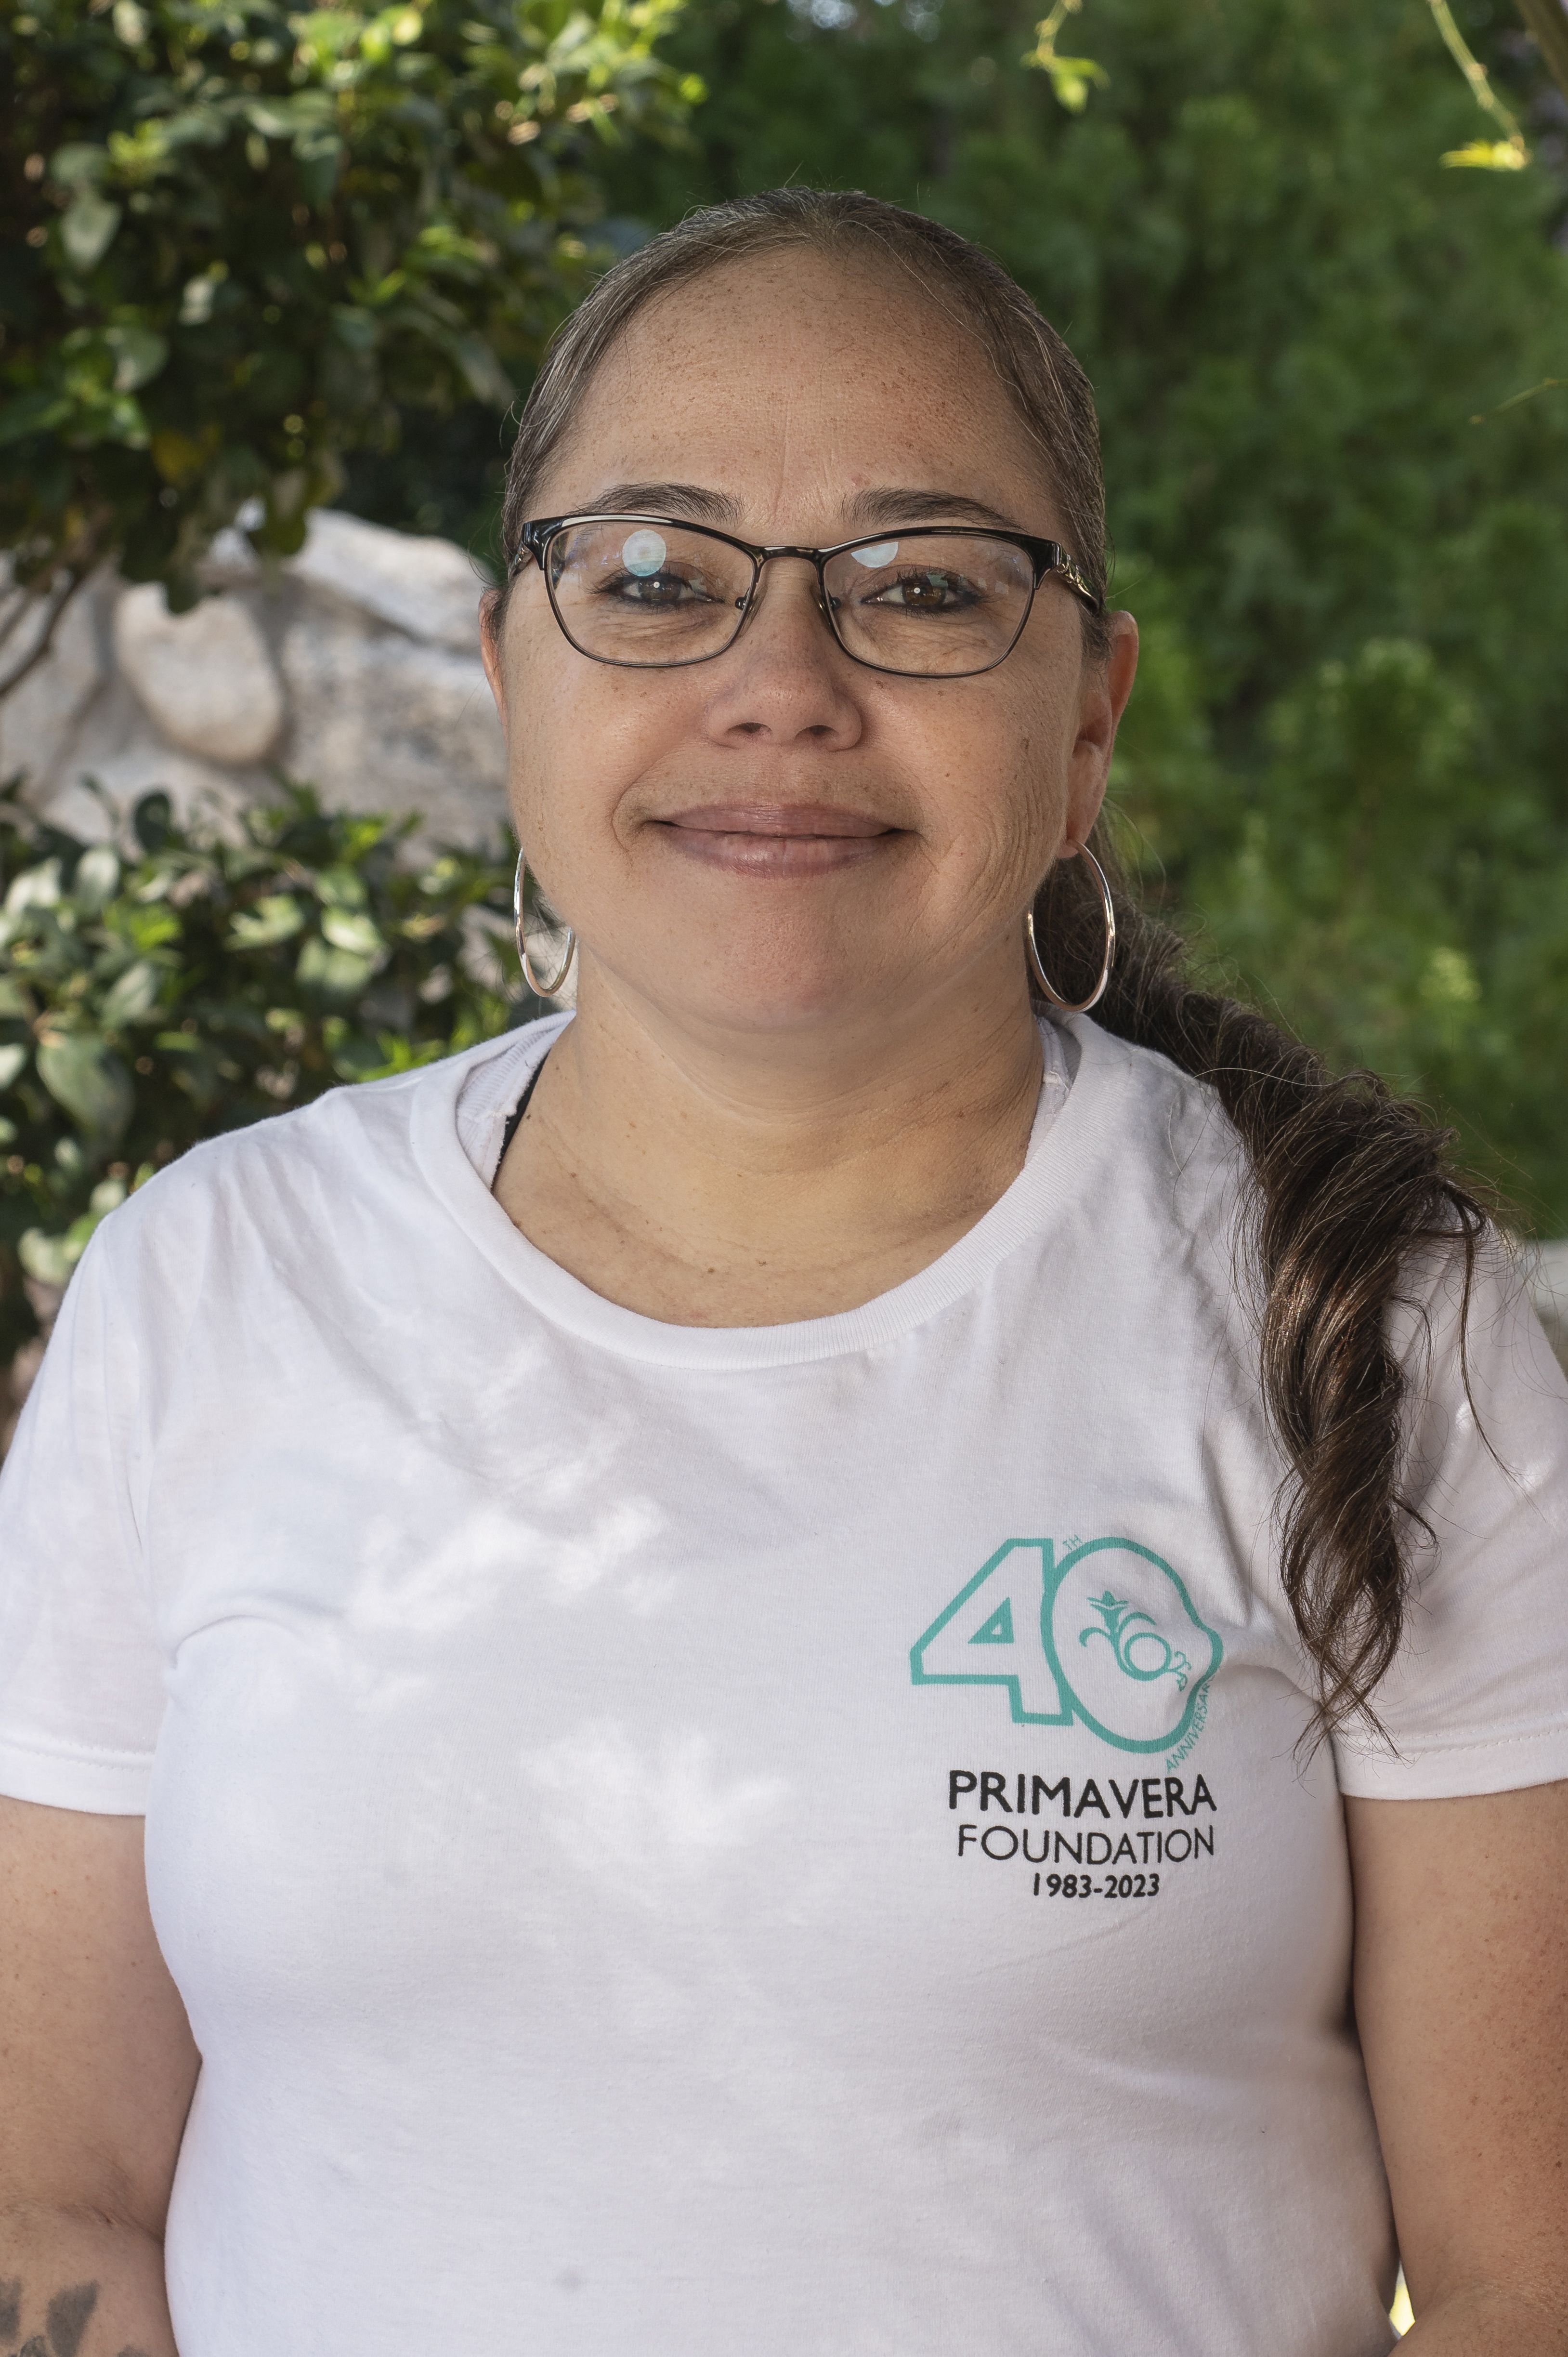 Primavera staff member turns her life around, helps others